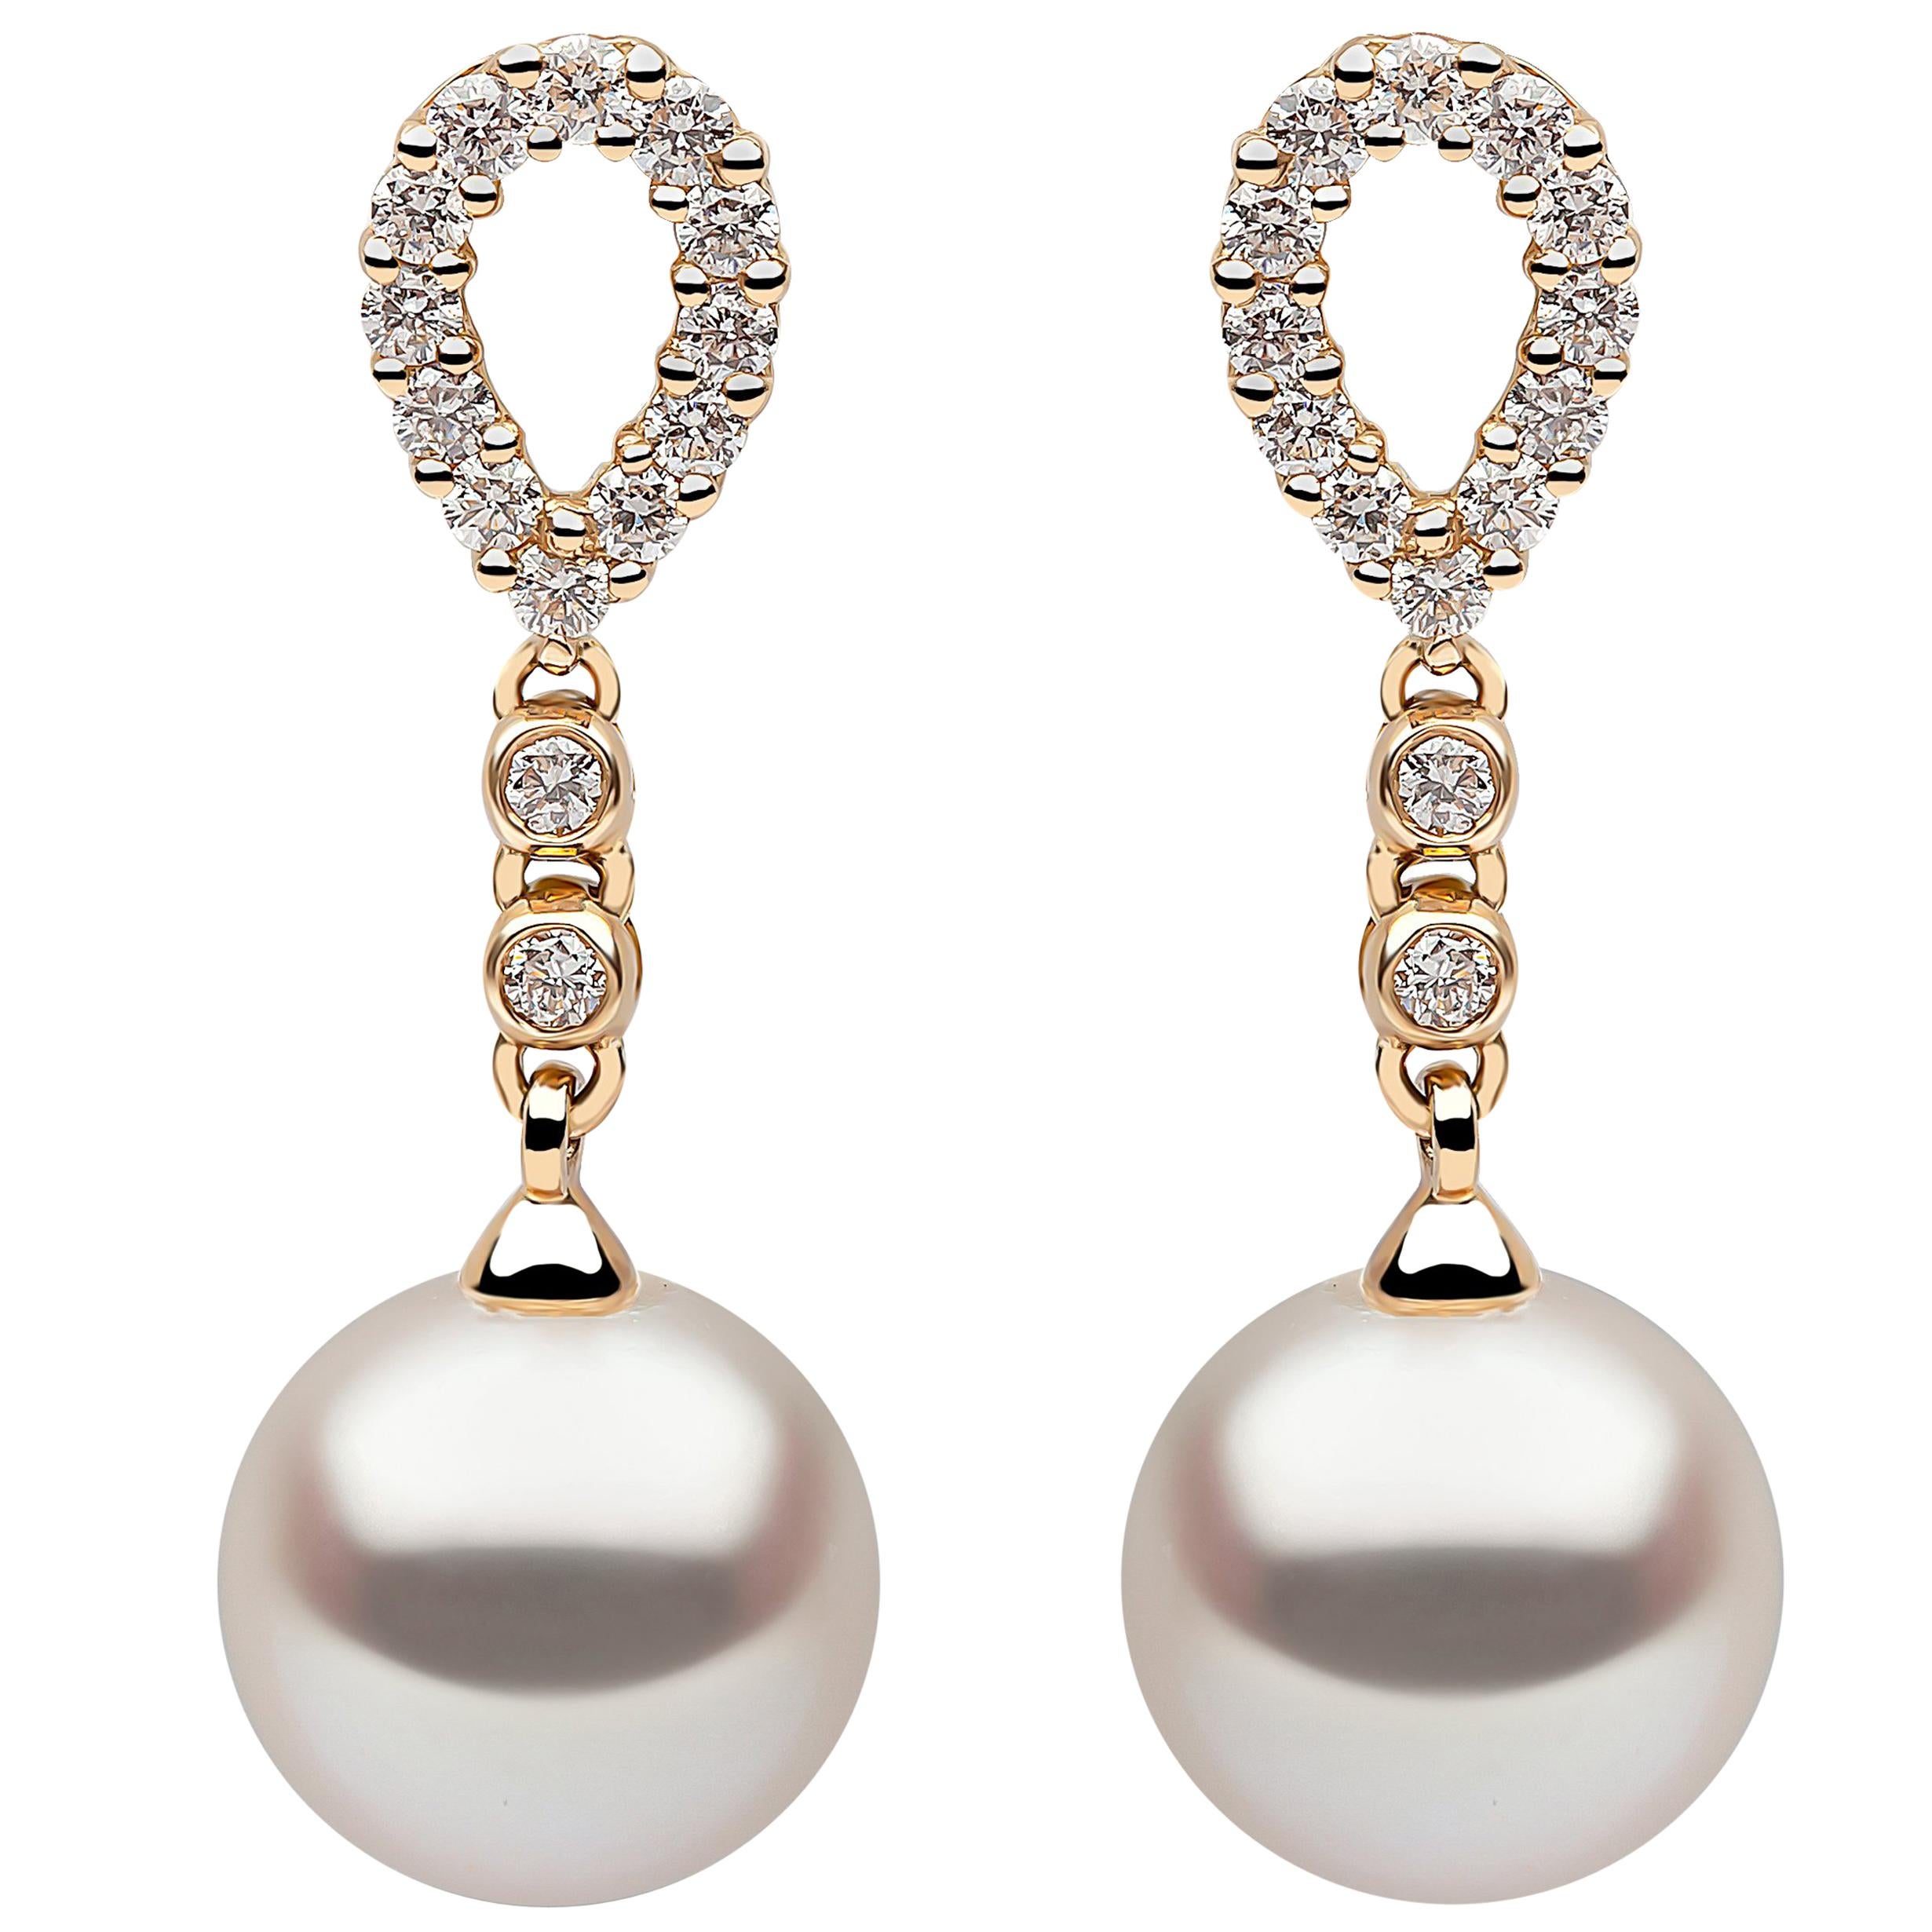 Yoko London Freshwater Pearl and Diamond Earrings, Set in 18 Karat Yellow Gold